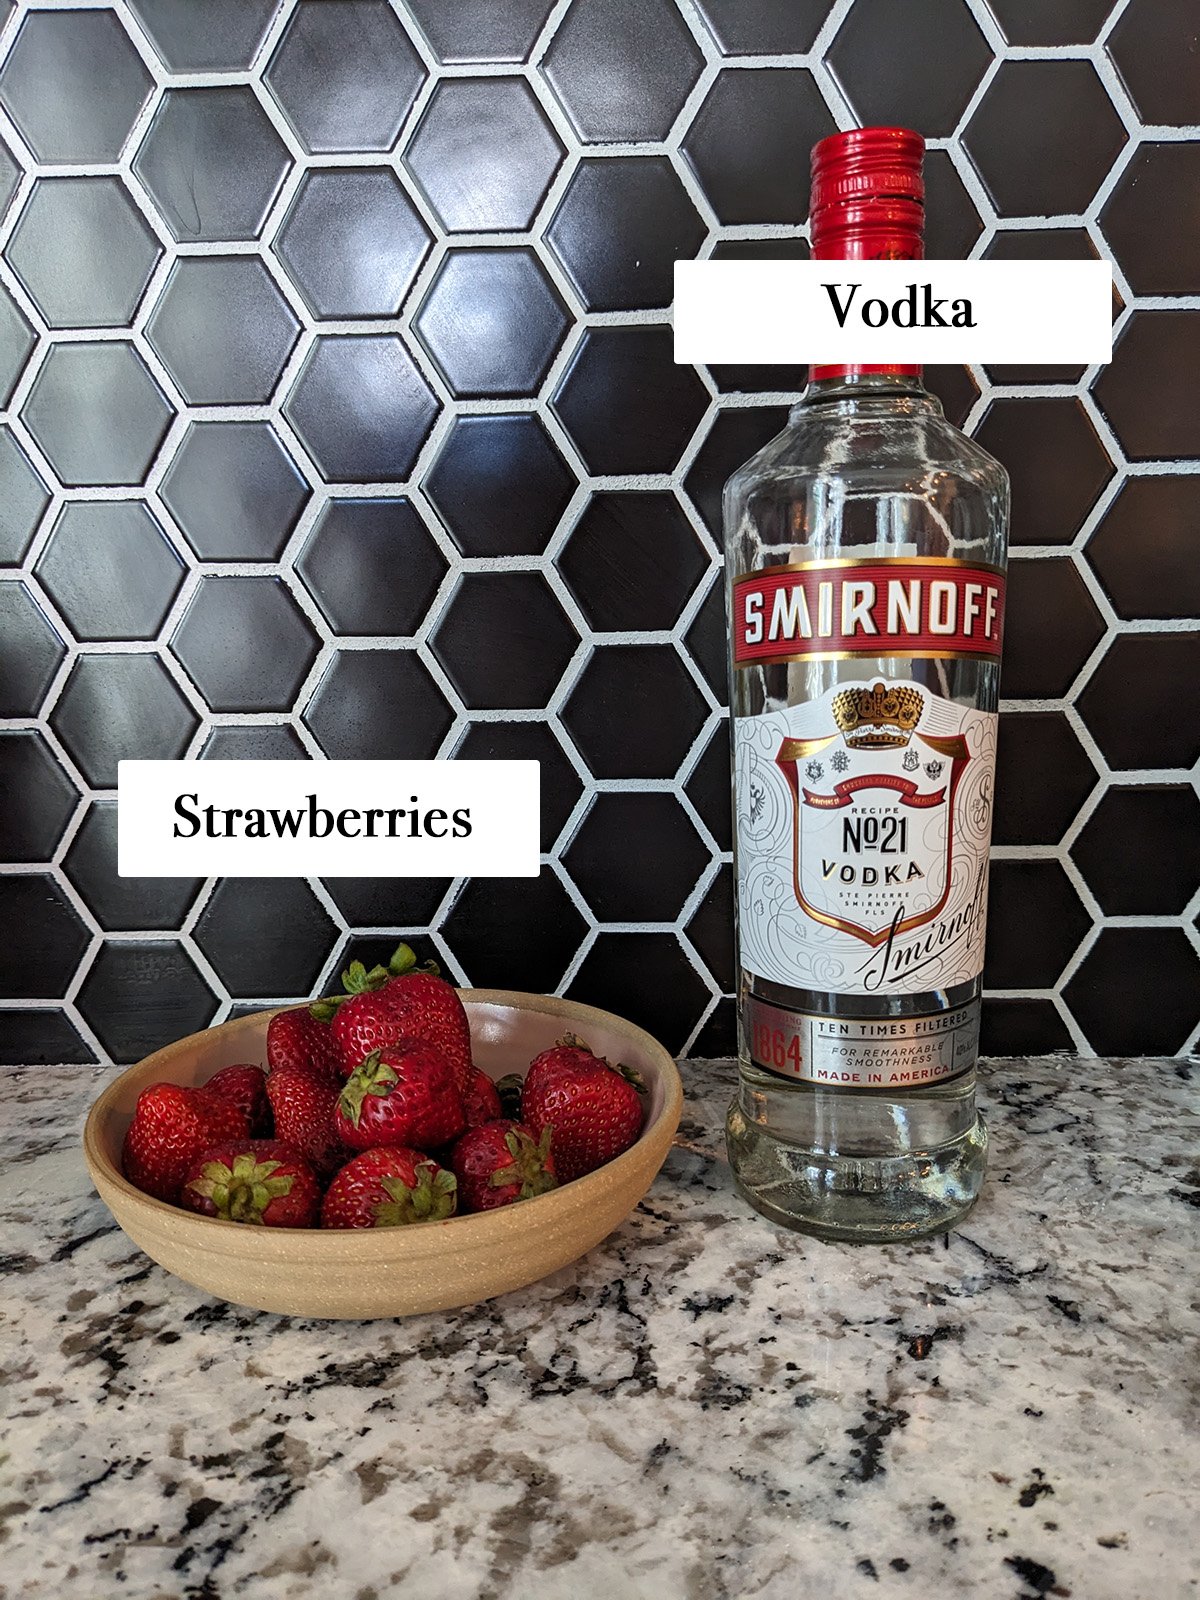 ingredients for making strawberry vodka.